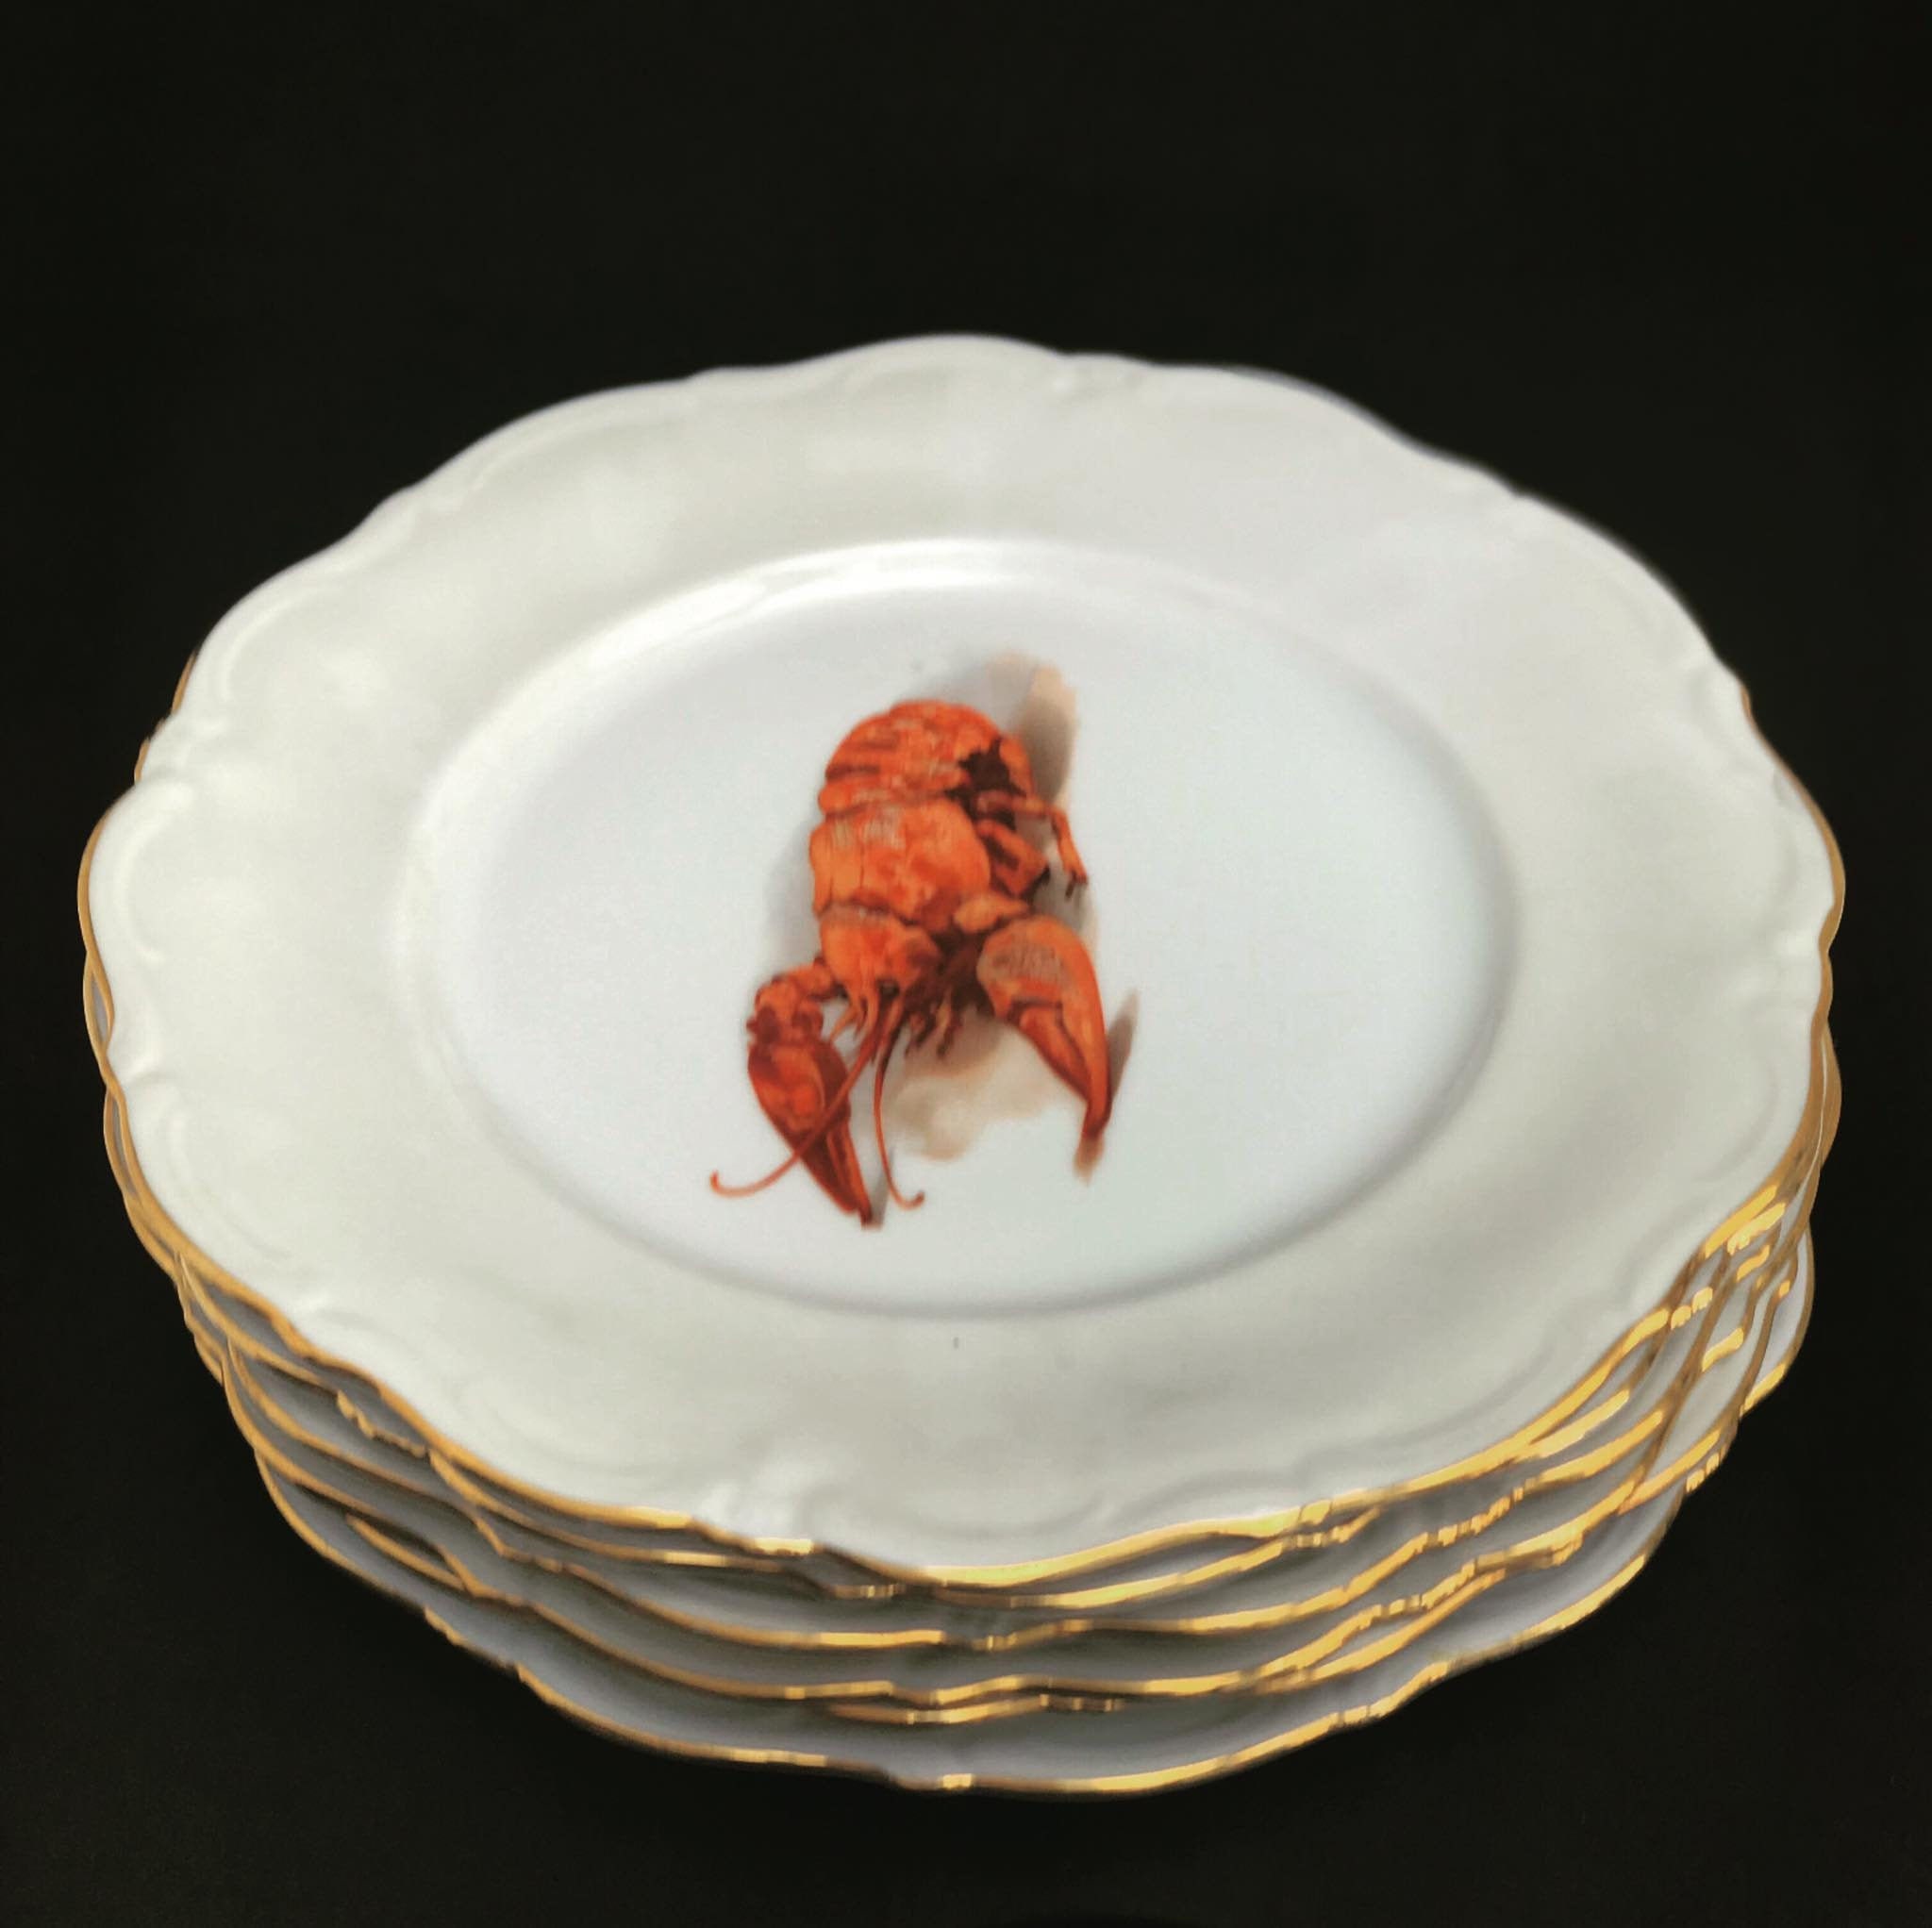 Lobster Plates Dish Set Plates Seafood Vintage French Porcelain Orange Decor Wedding Gift Transfert Decoration For Her